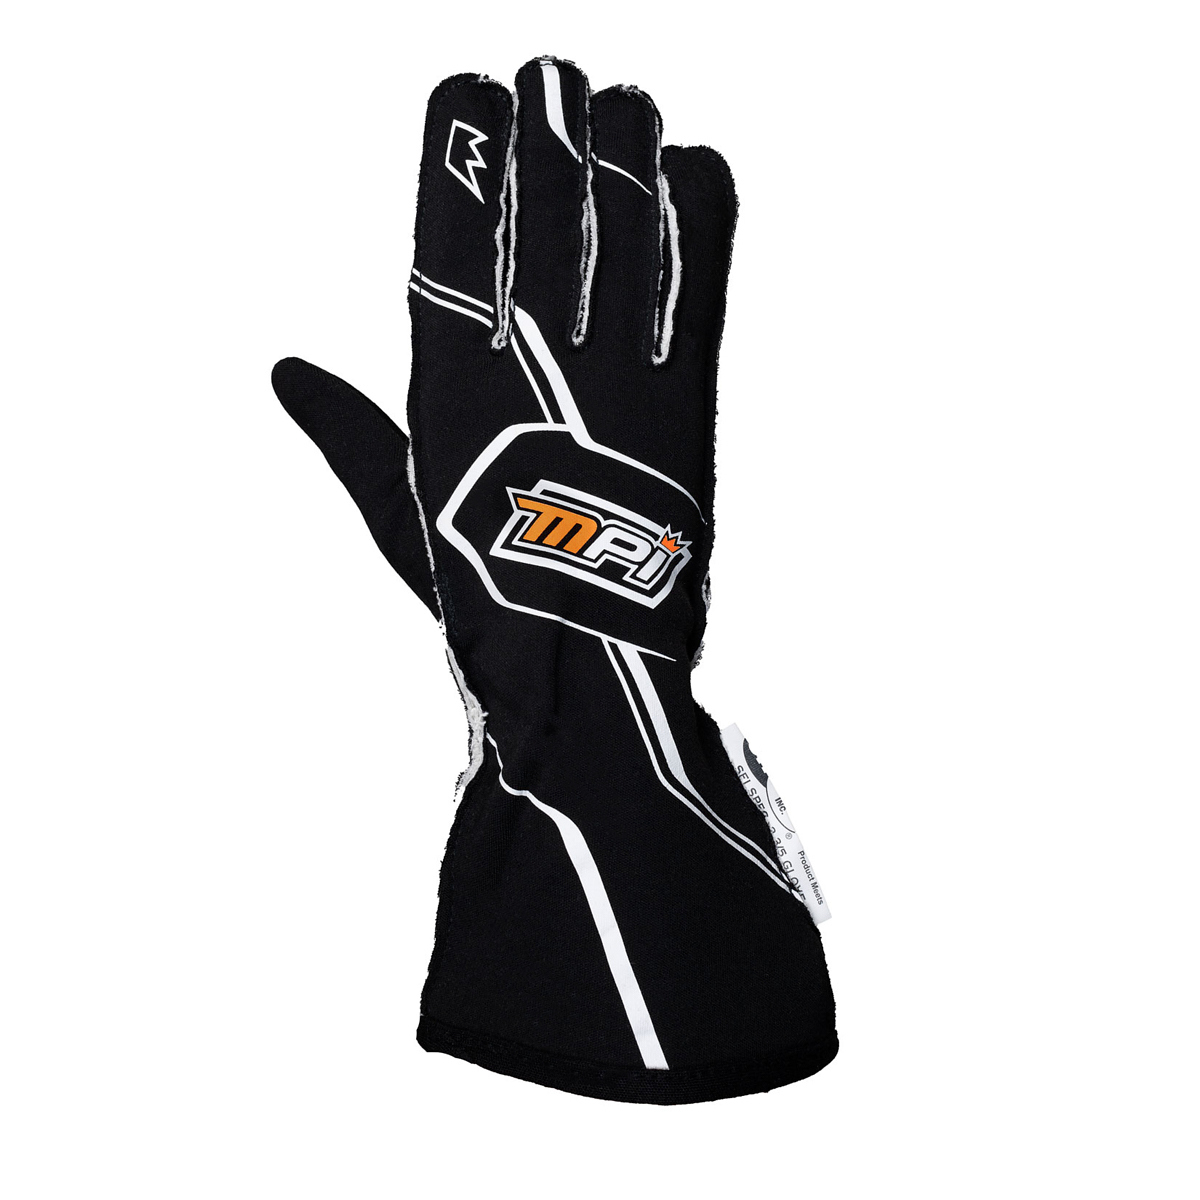 MPI USA MPI-GL-B-M Driving Gloves, SFI 3.3/5, Double Layer, Nomex, Padded Palm, Black / White, Medium, Pair